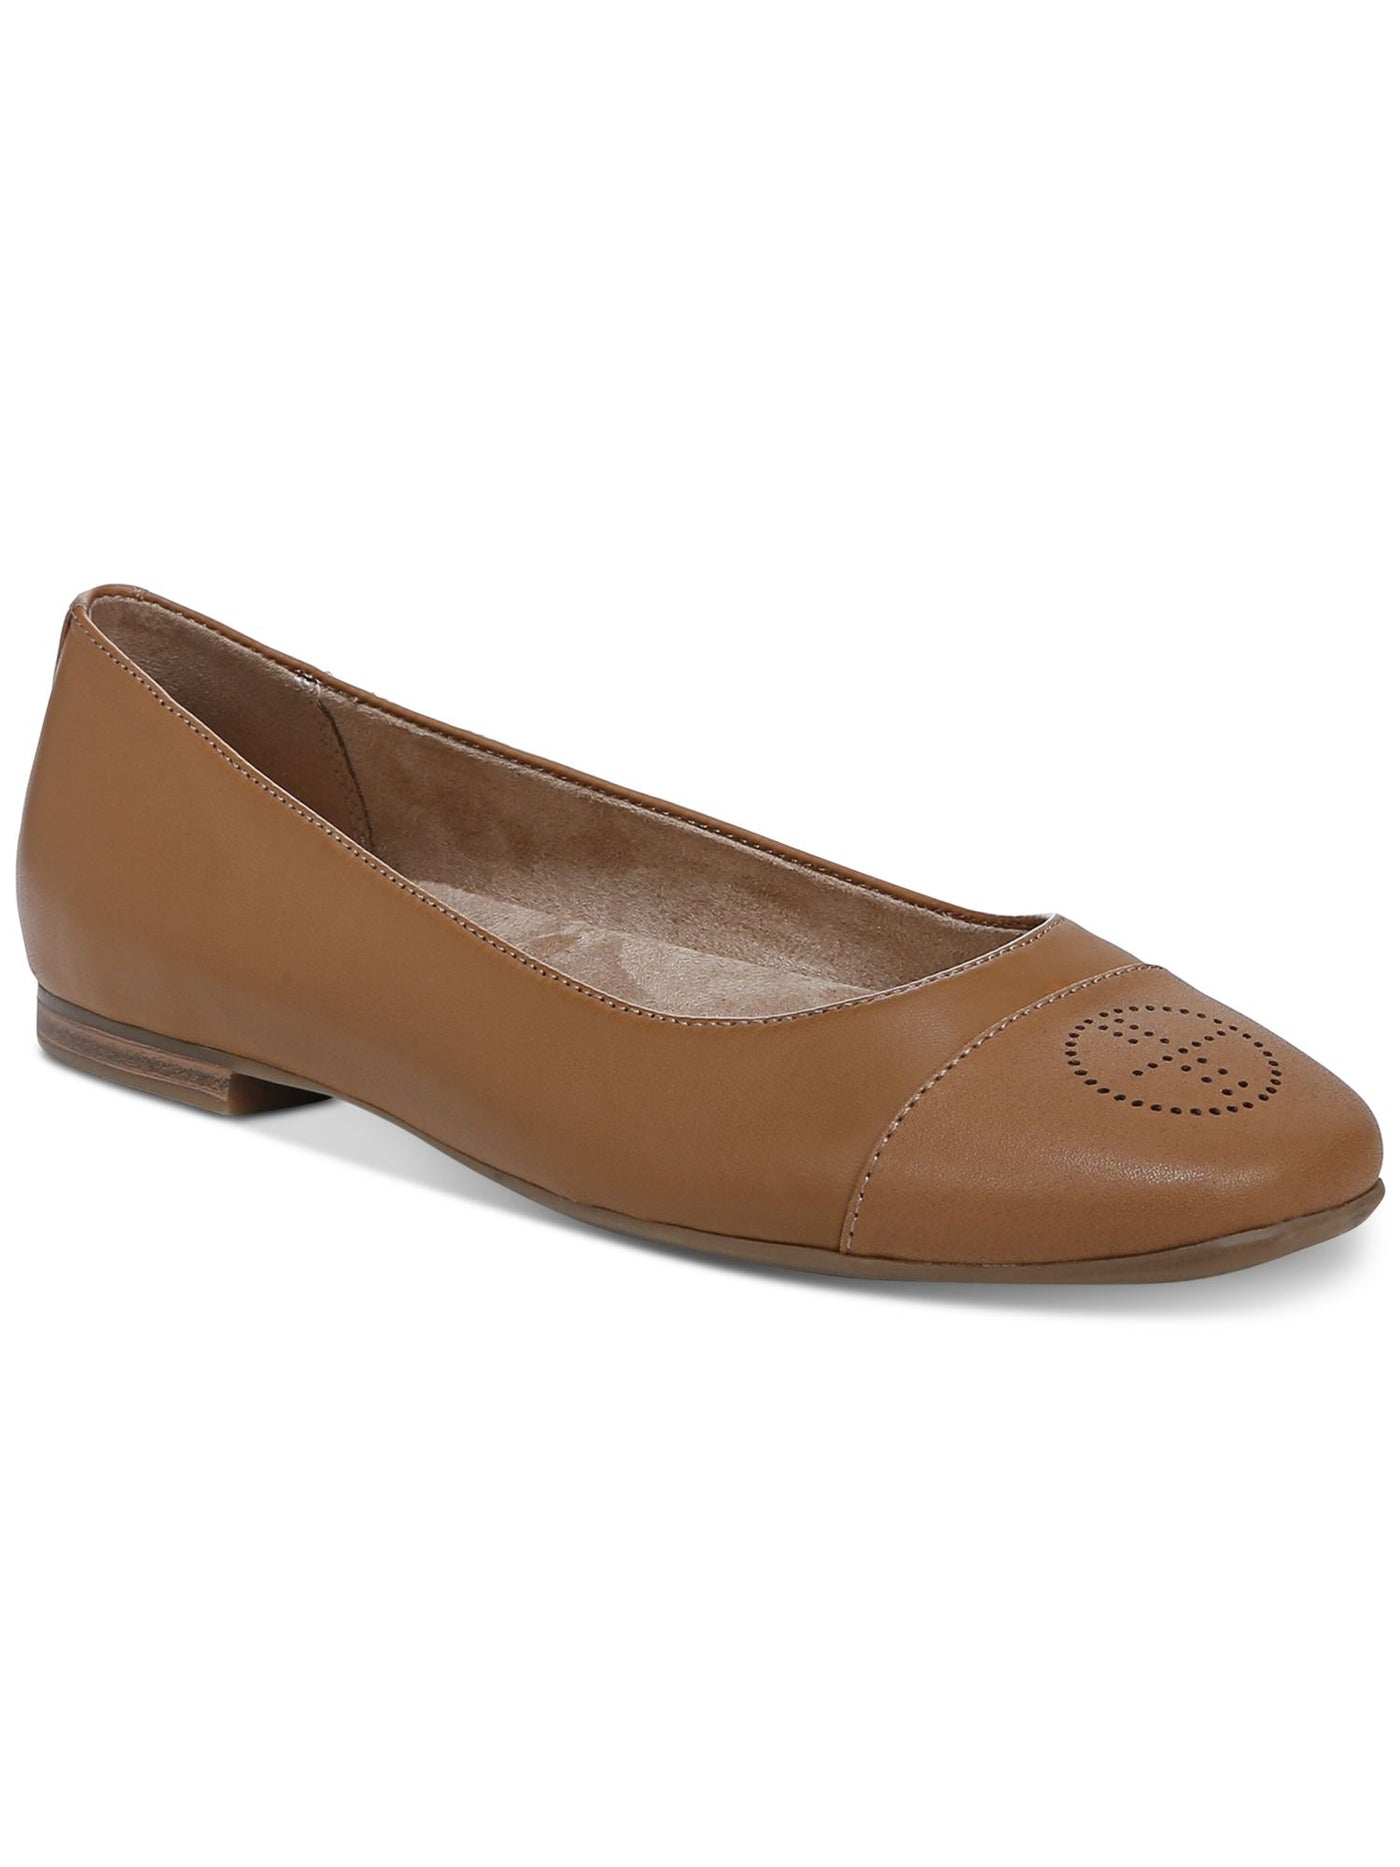 GIANI BERNINI Womens Brown Comfort Perforated Cushioned Aerinn Square Toe Slip On Flats Shoes 11 M